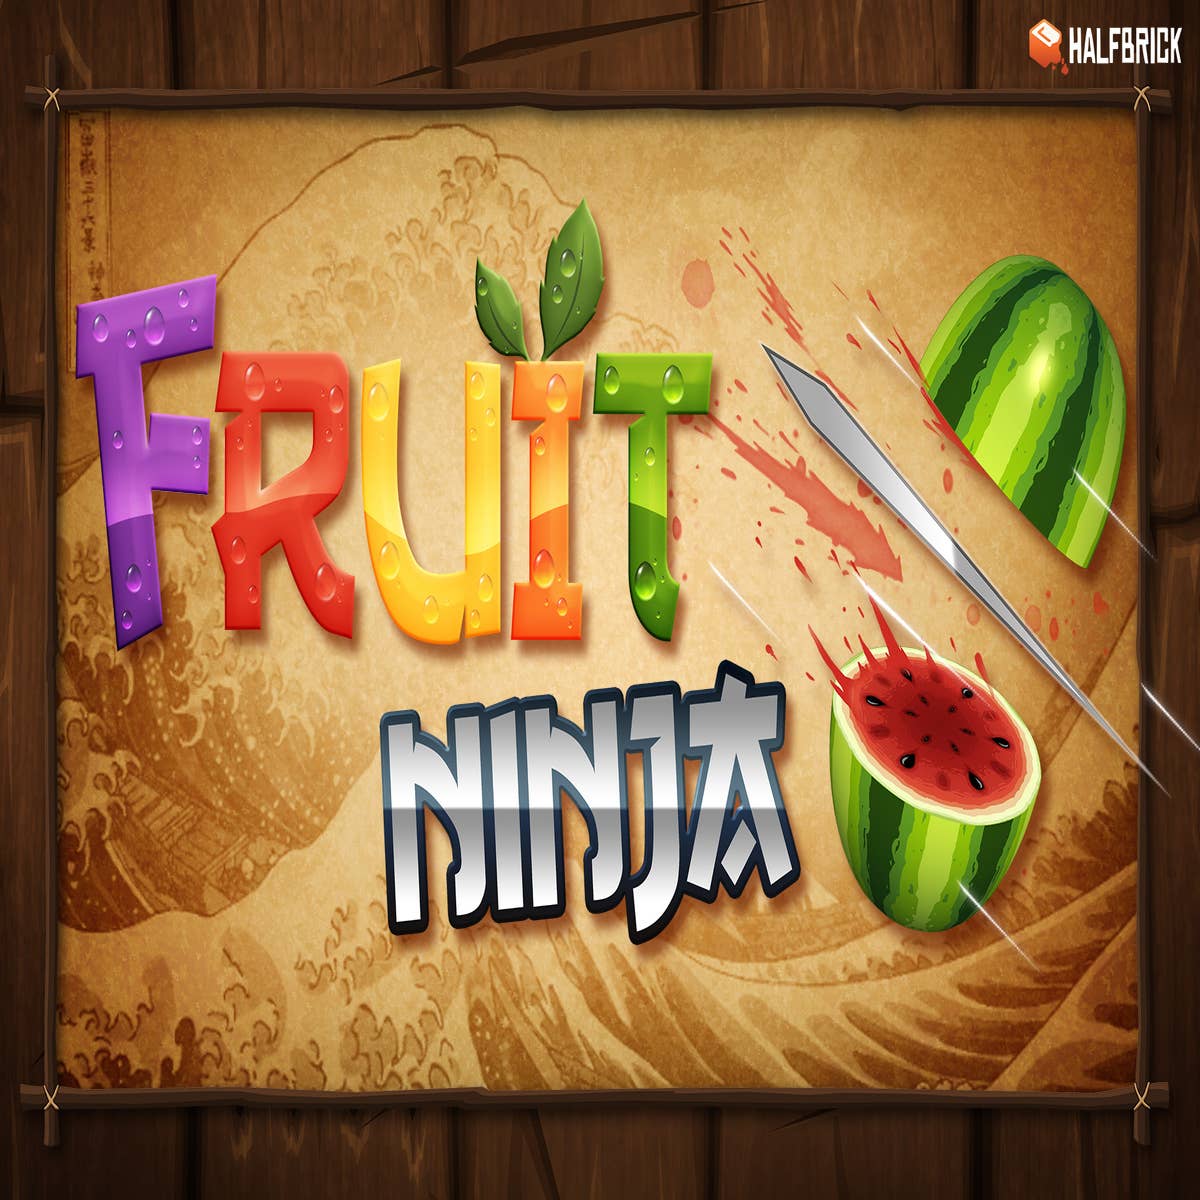 Fruit Ninja vai virar filme - 23/05/2016 - UOL Start